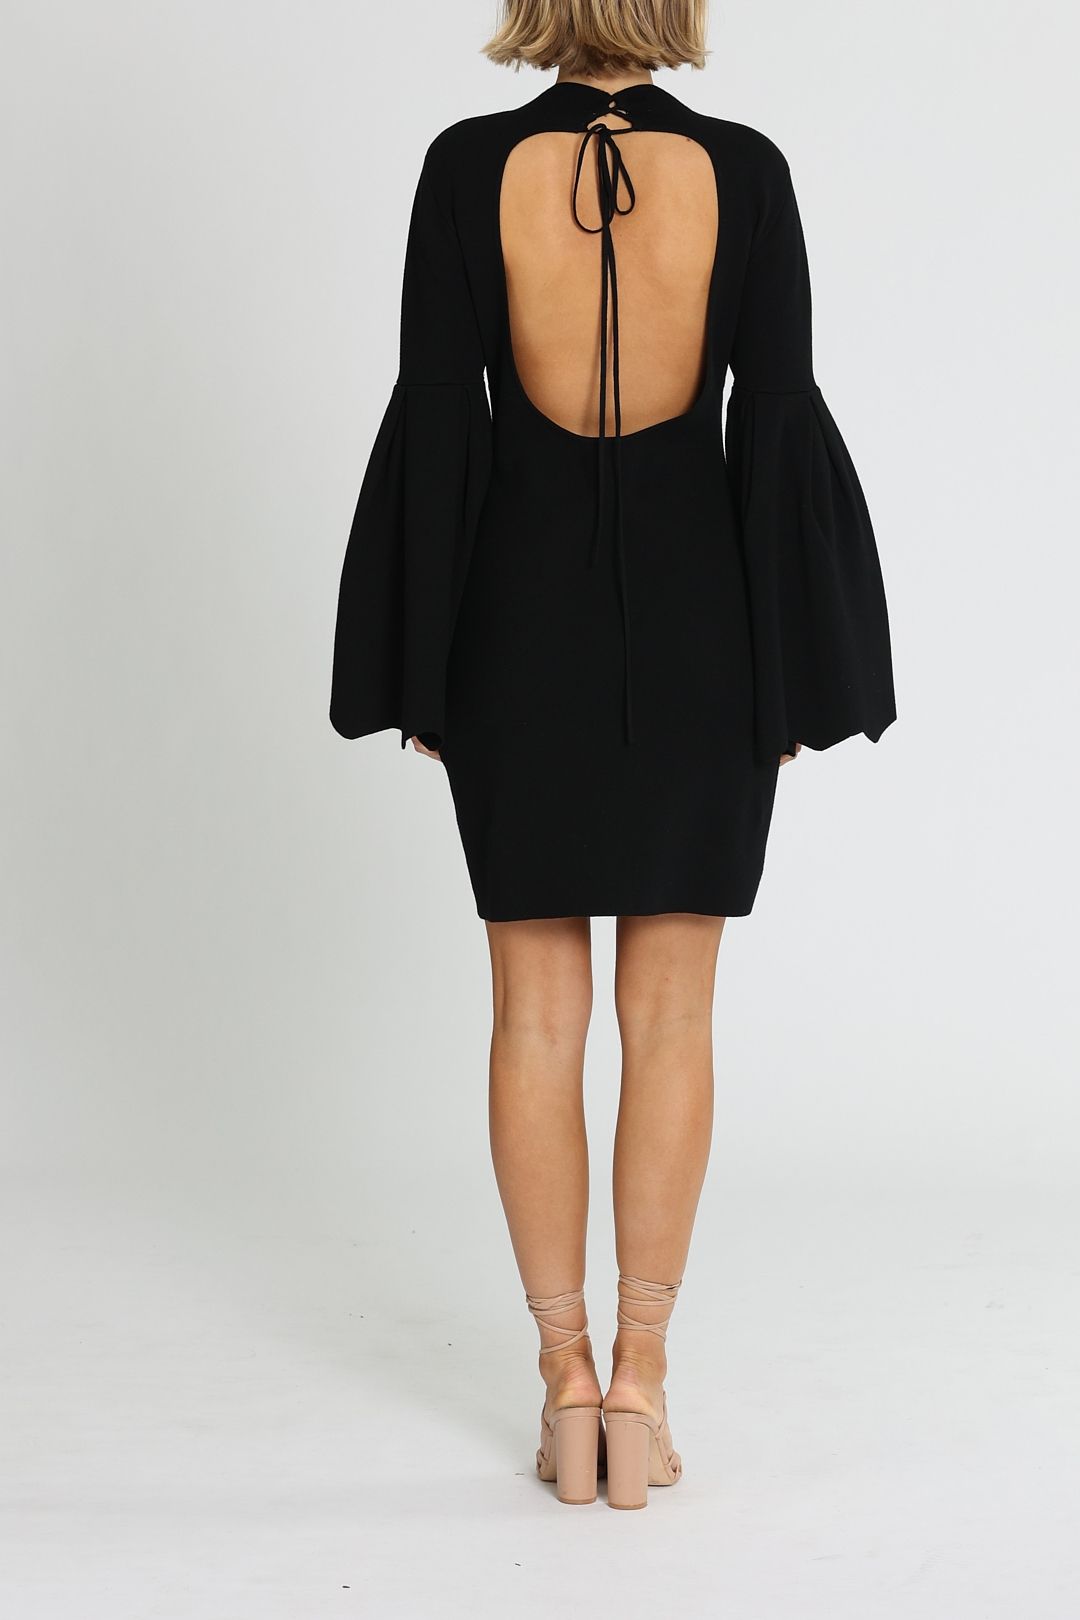 Clea Ebony Knit Dress Black Backless